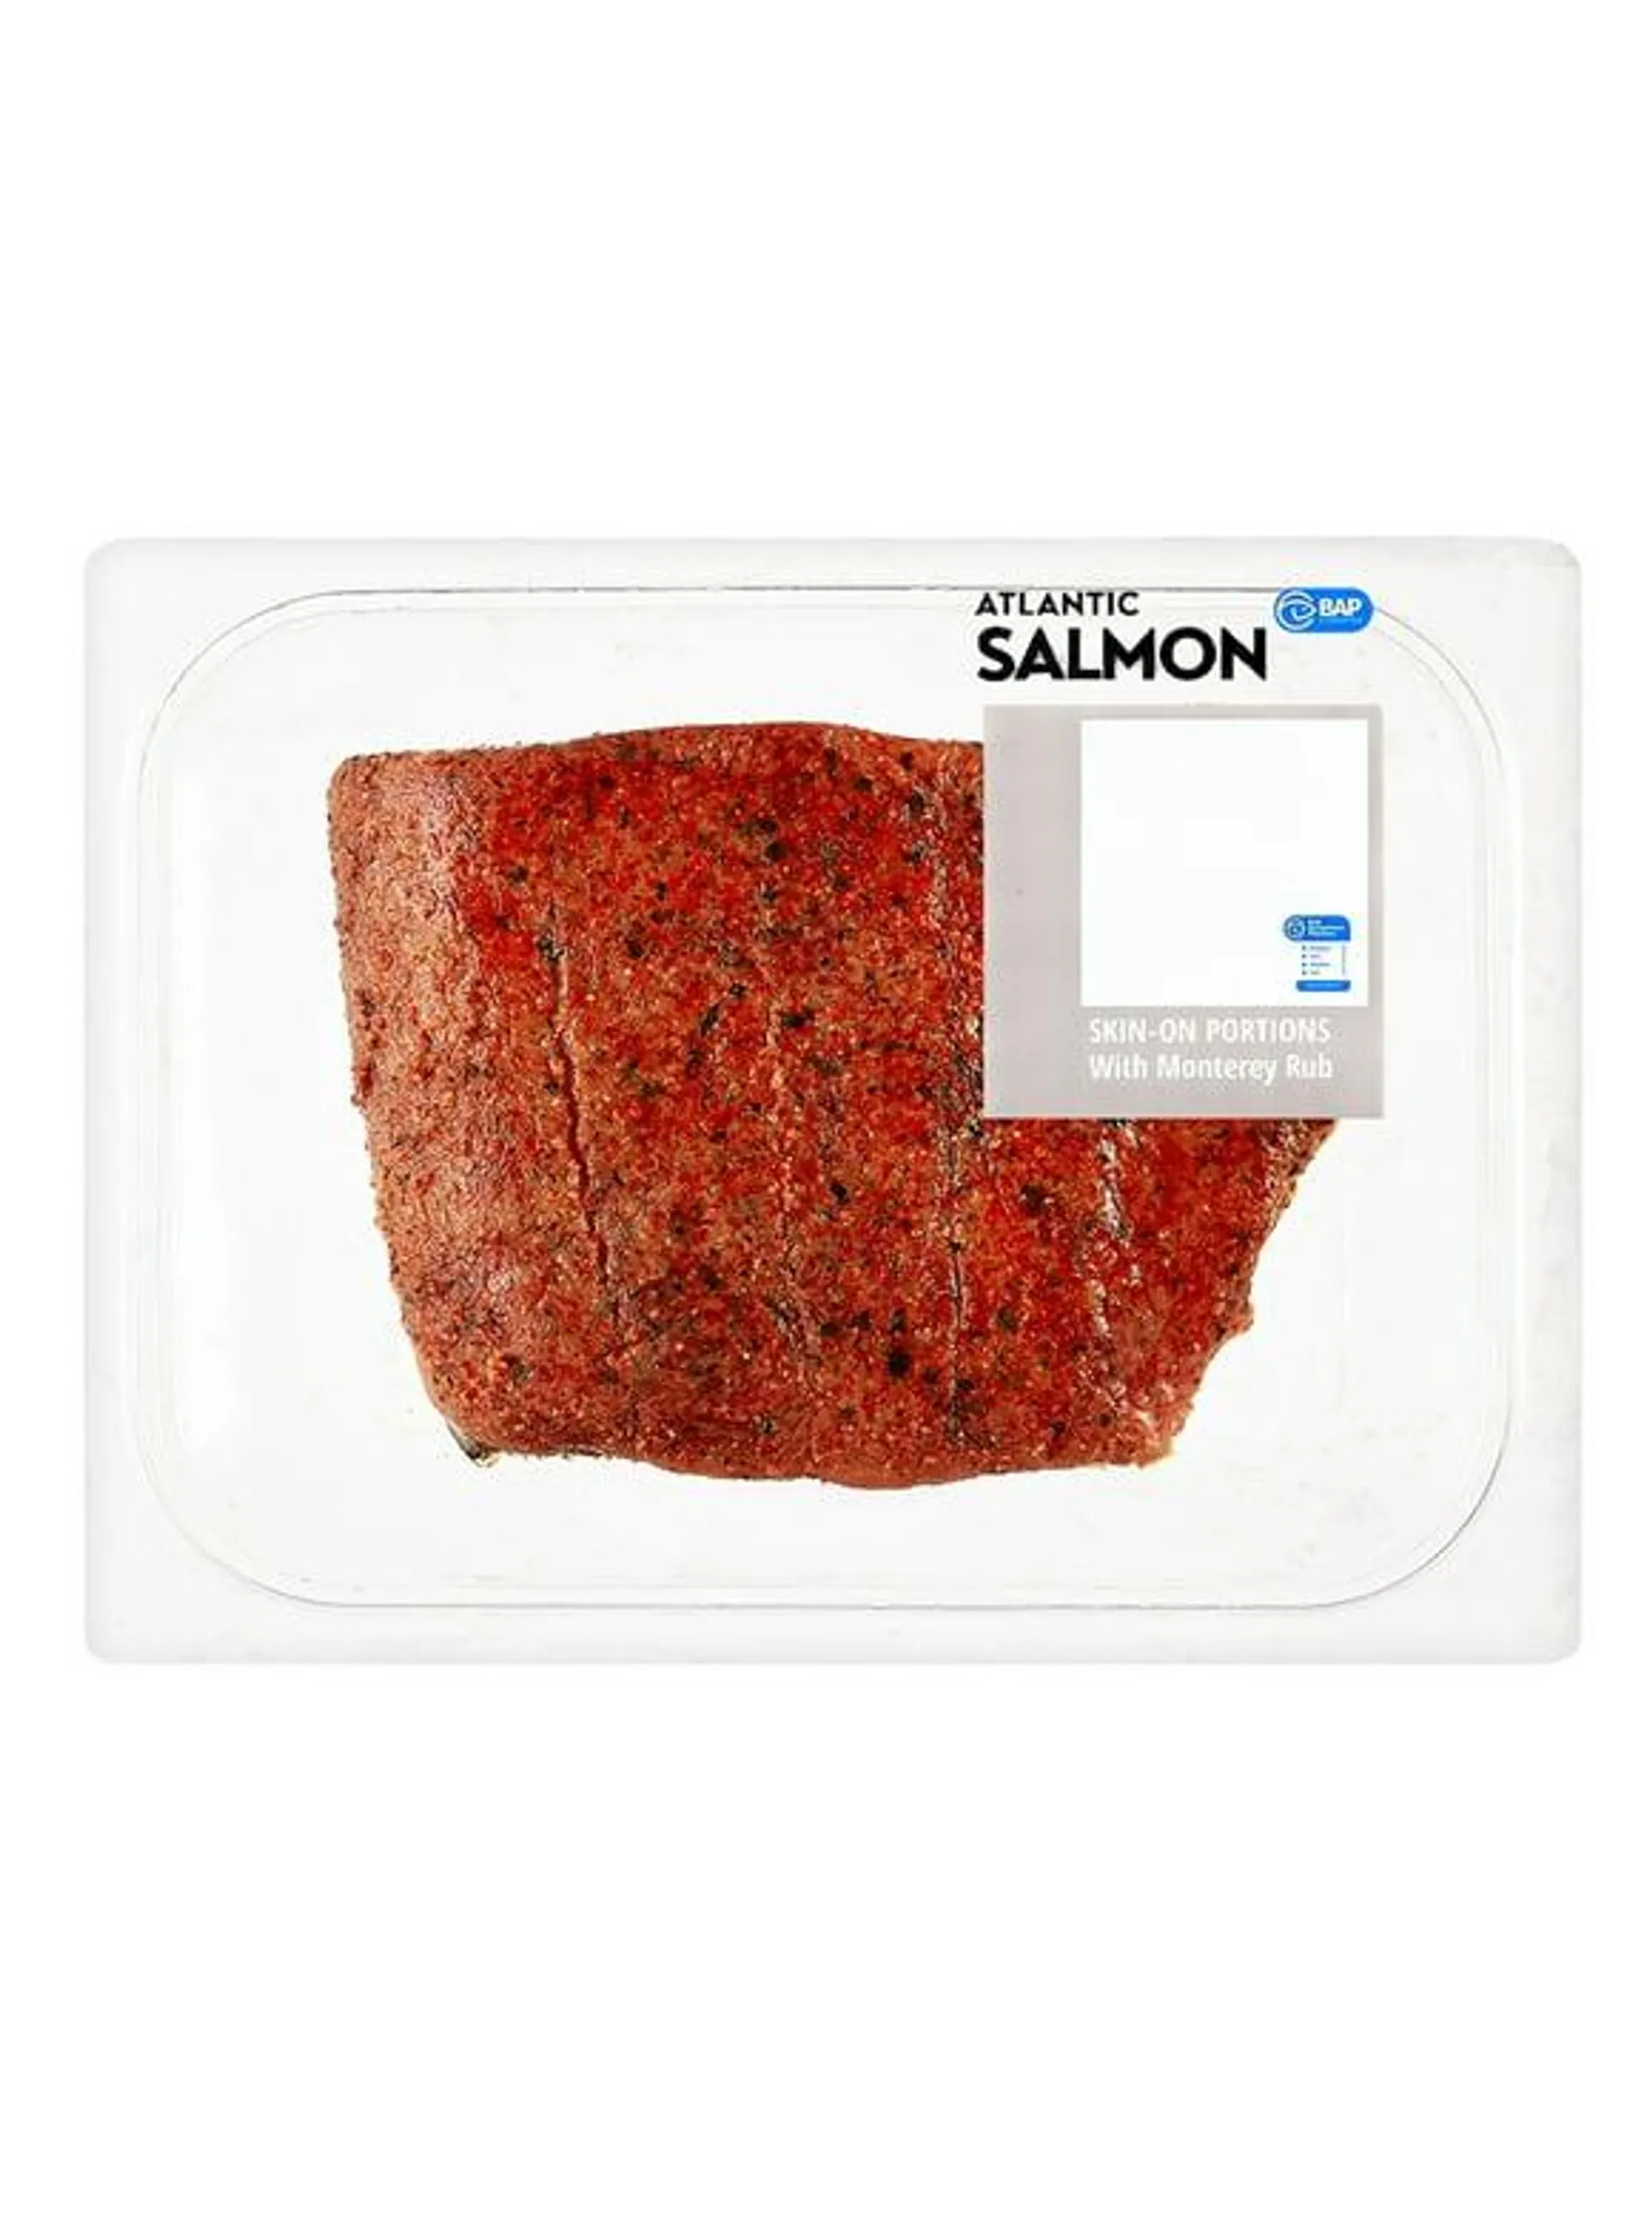 Fresh Atlantic Salmon Portion with Monterrey Rub, 0.95 - 1.25 lb. Whole Salmon Portion. Certifications - BAP Certified.